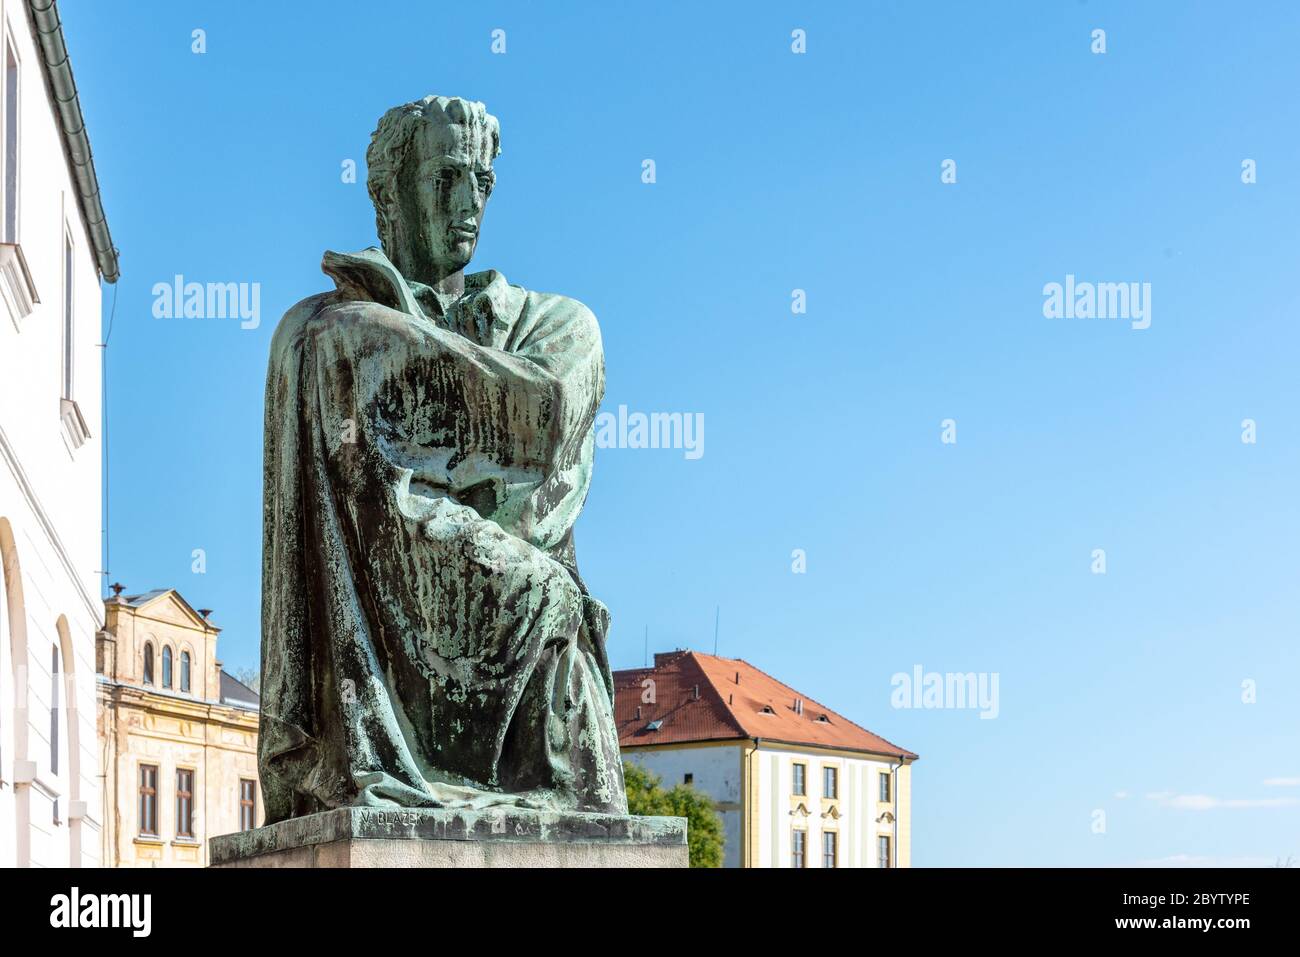 LITOMERICE, CZECH REPUBLIC - SEPTEMBER 23, 2018: Statue of poet Karel Hynek Macha in Litomerice, Czech Republic. Stock Photo